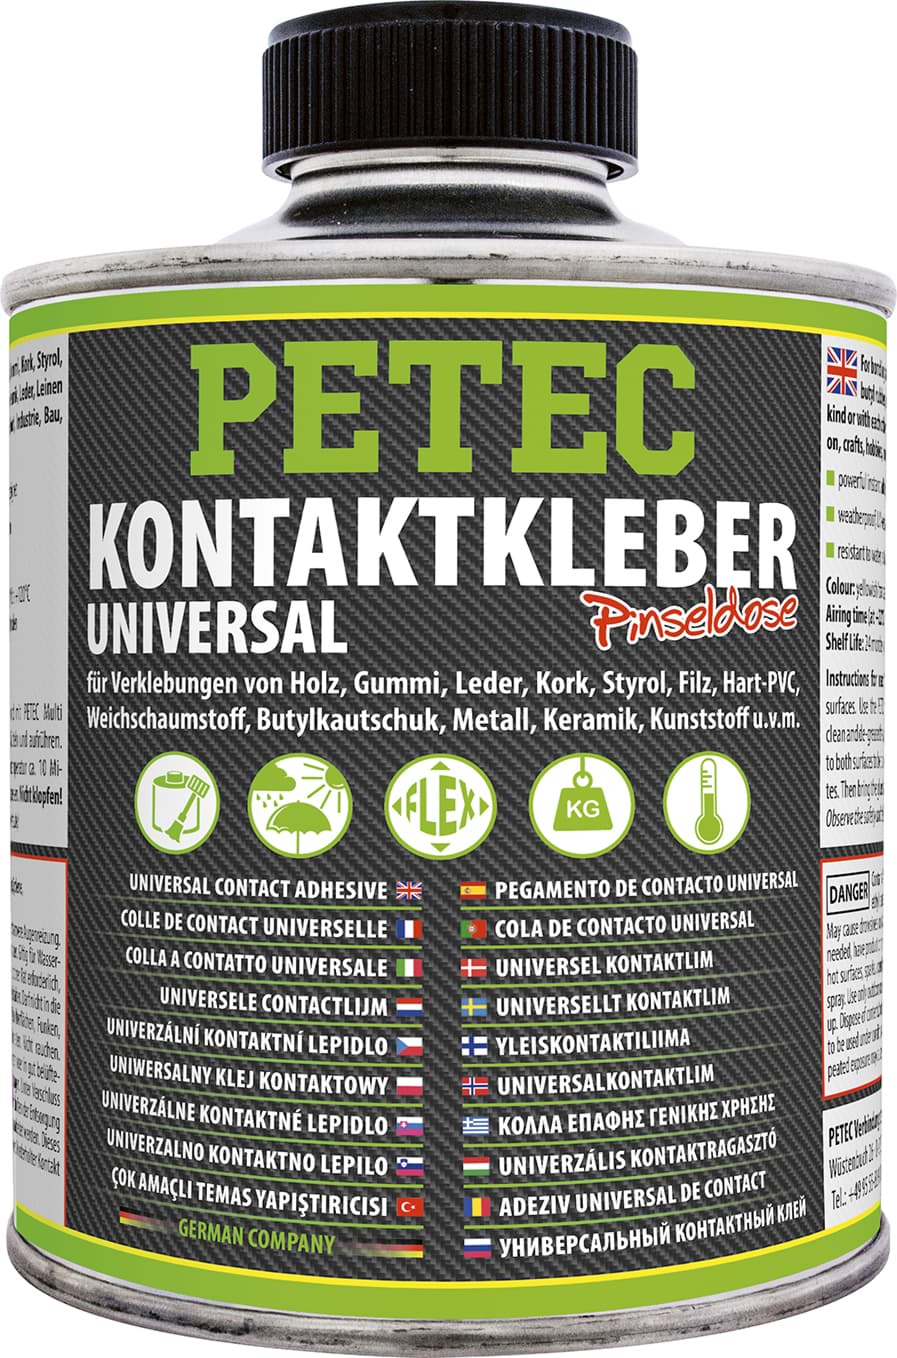 Picture of Petec Kontaktkleber Universal Pinseldose 350ml